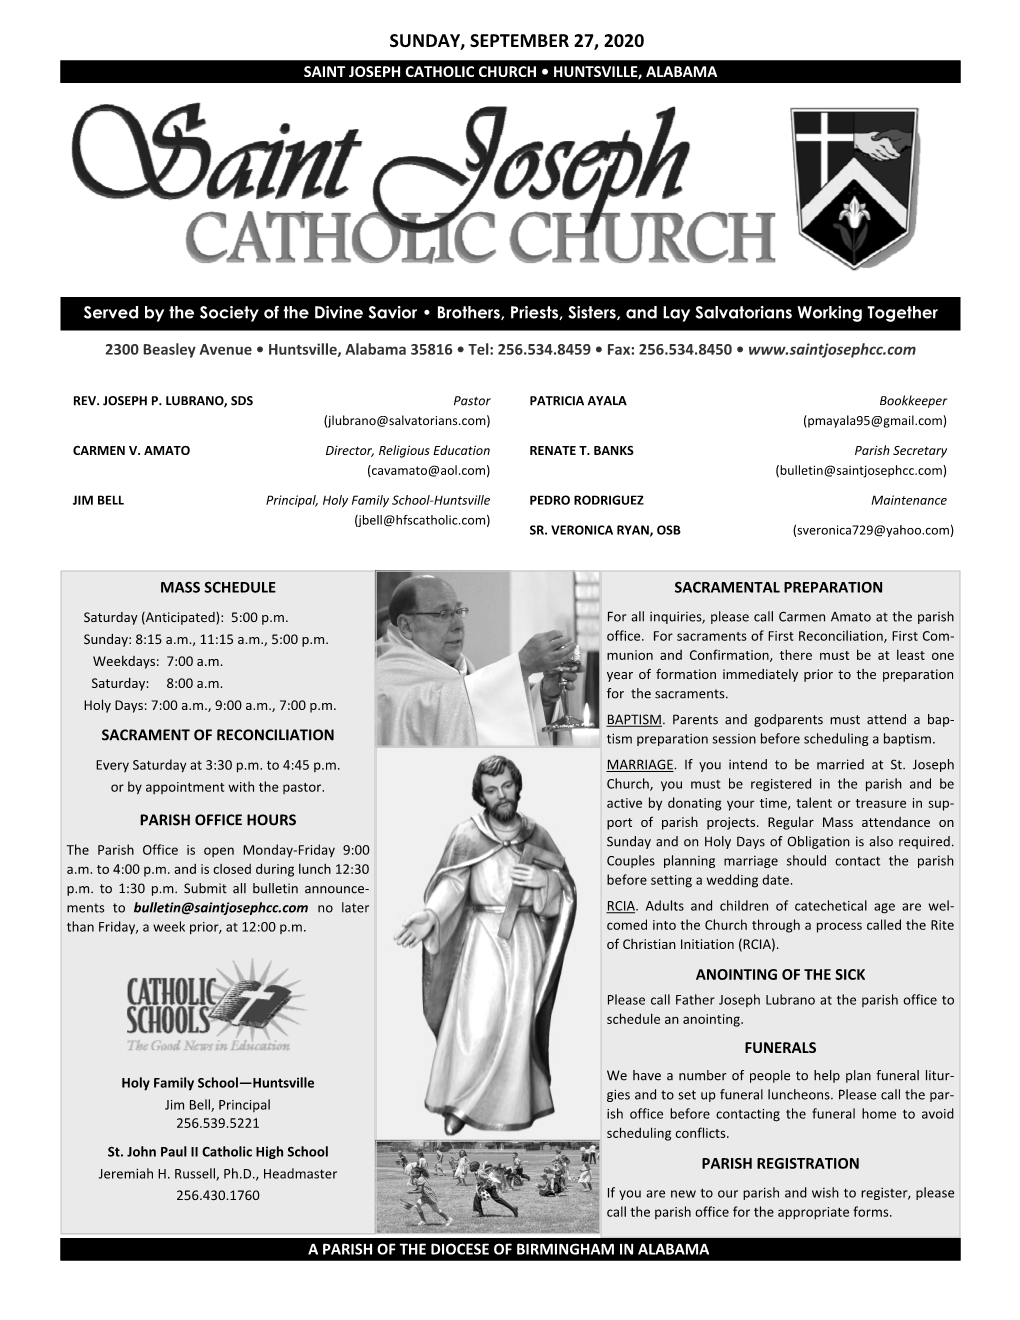 Sunday, September 27, 2020 Saint Joseph Catholic Church • Huntsville, Alabama